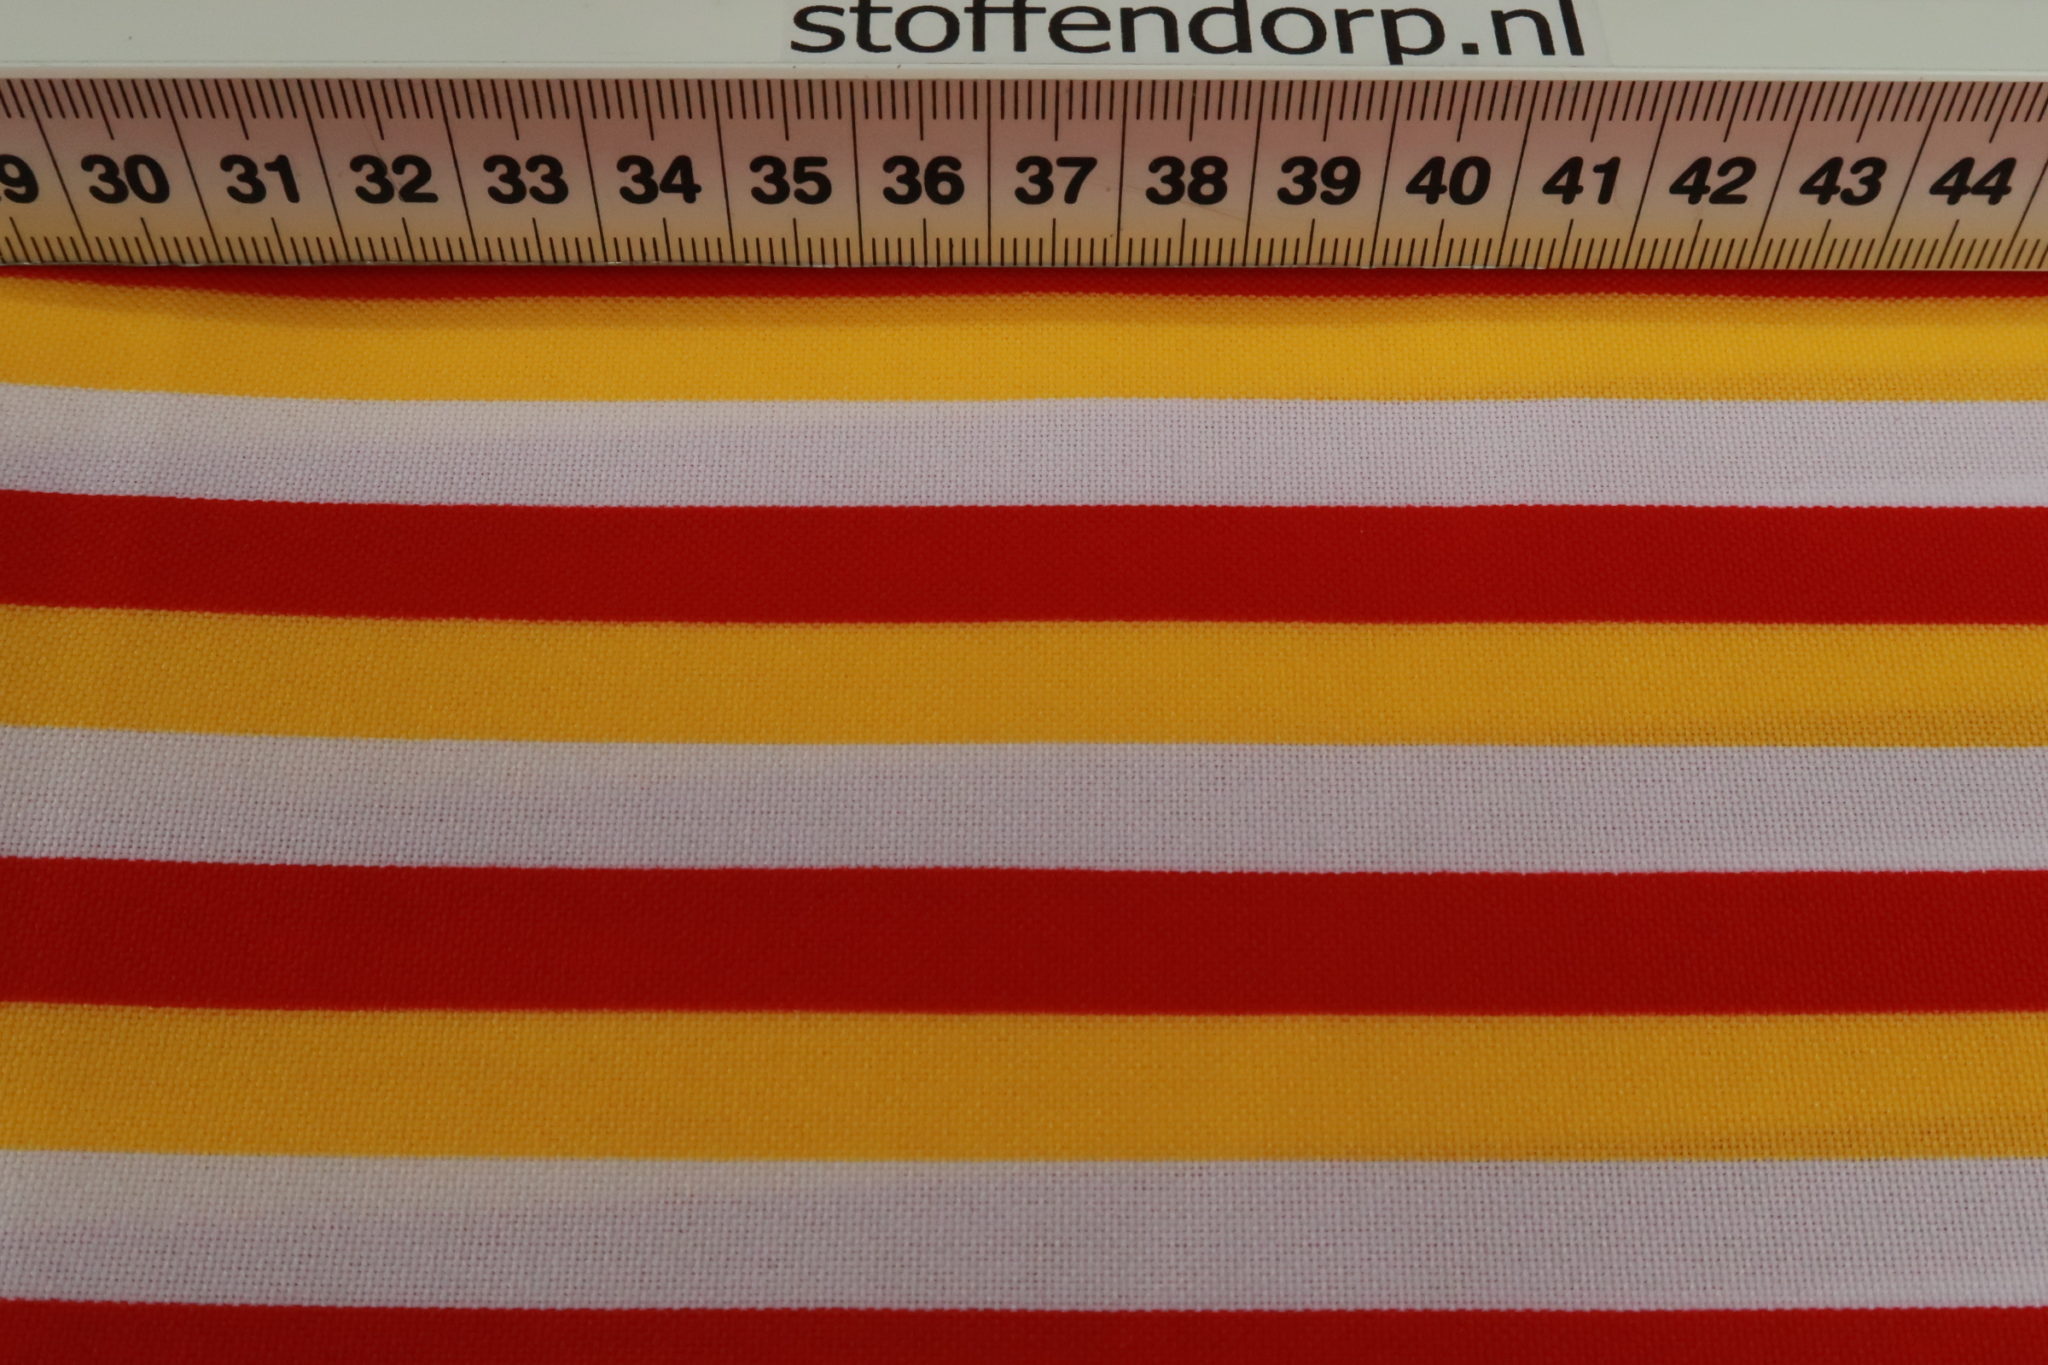 Opa timer Uitrusting Oeteldonk stof, texture stof, streep print, rood,wit,geel. Q405 -  Stoffendorp